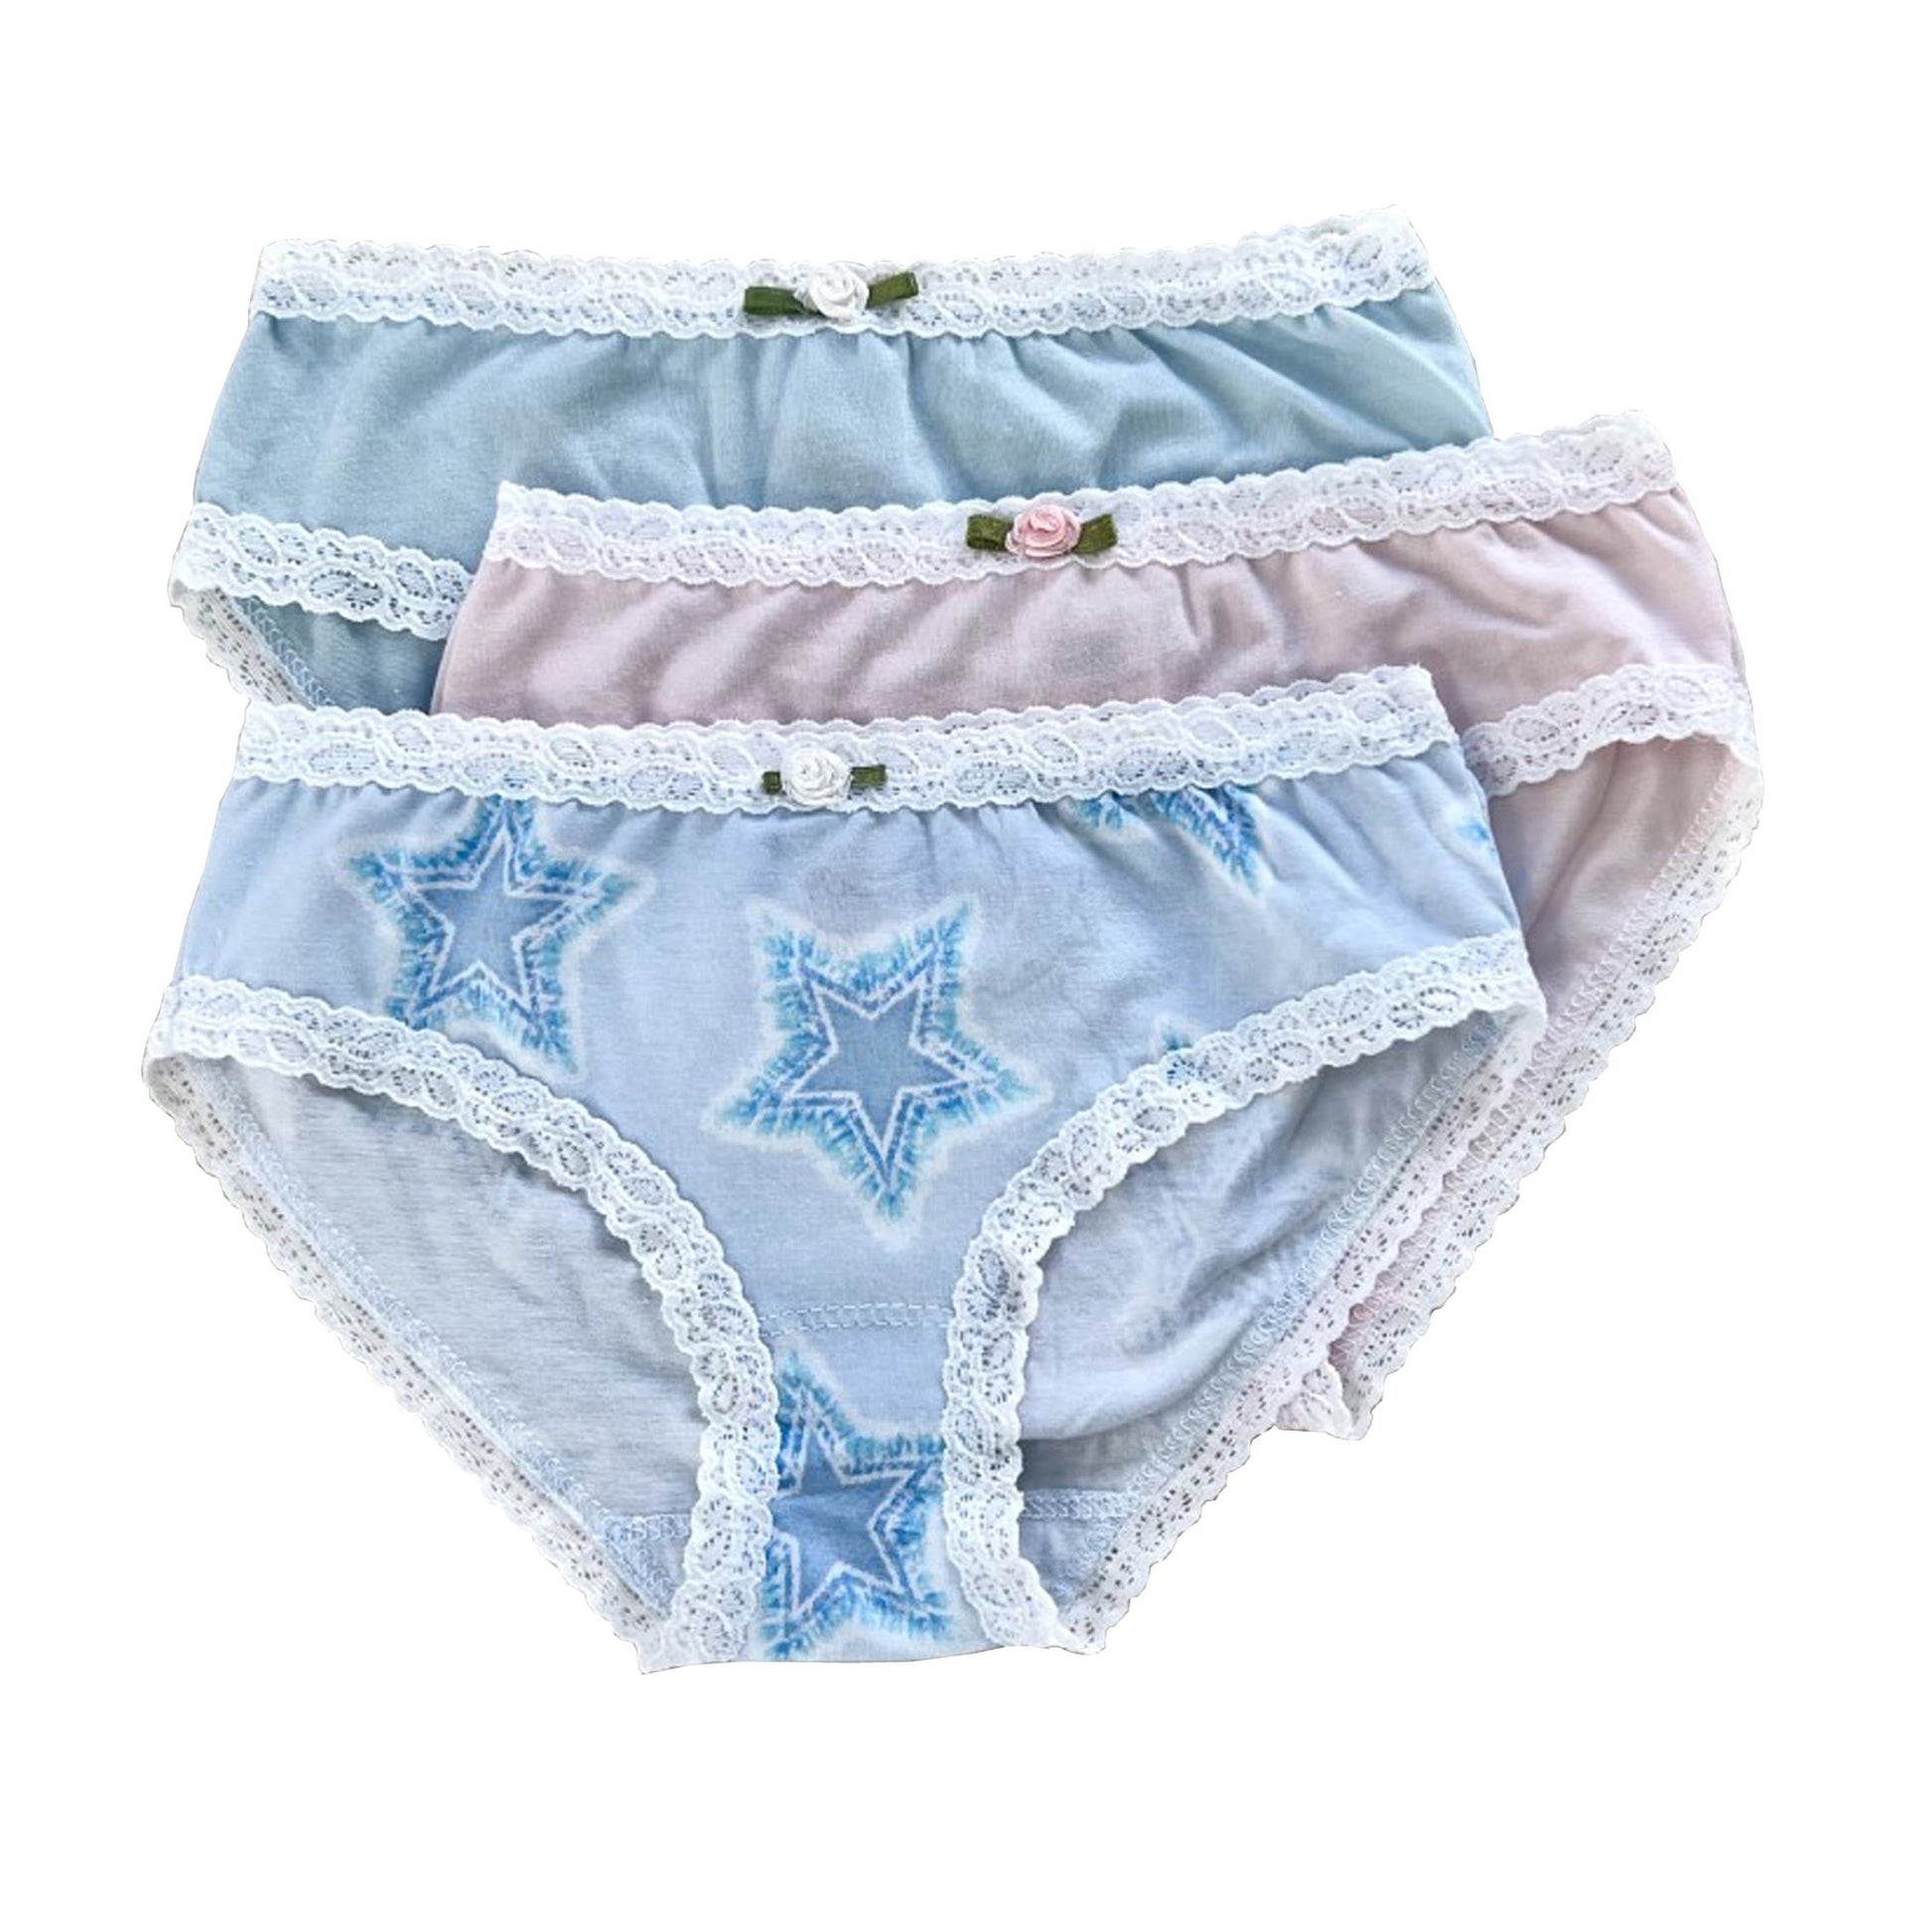 U20 Esme Girl's 3-Pack Panty on Sale Clearance